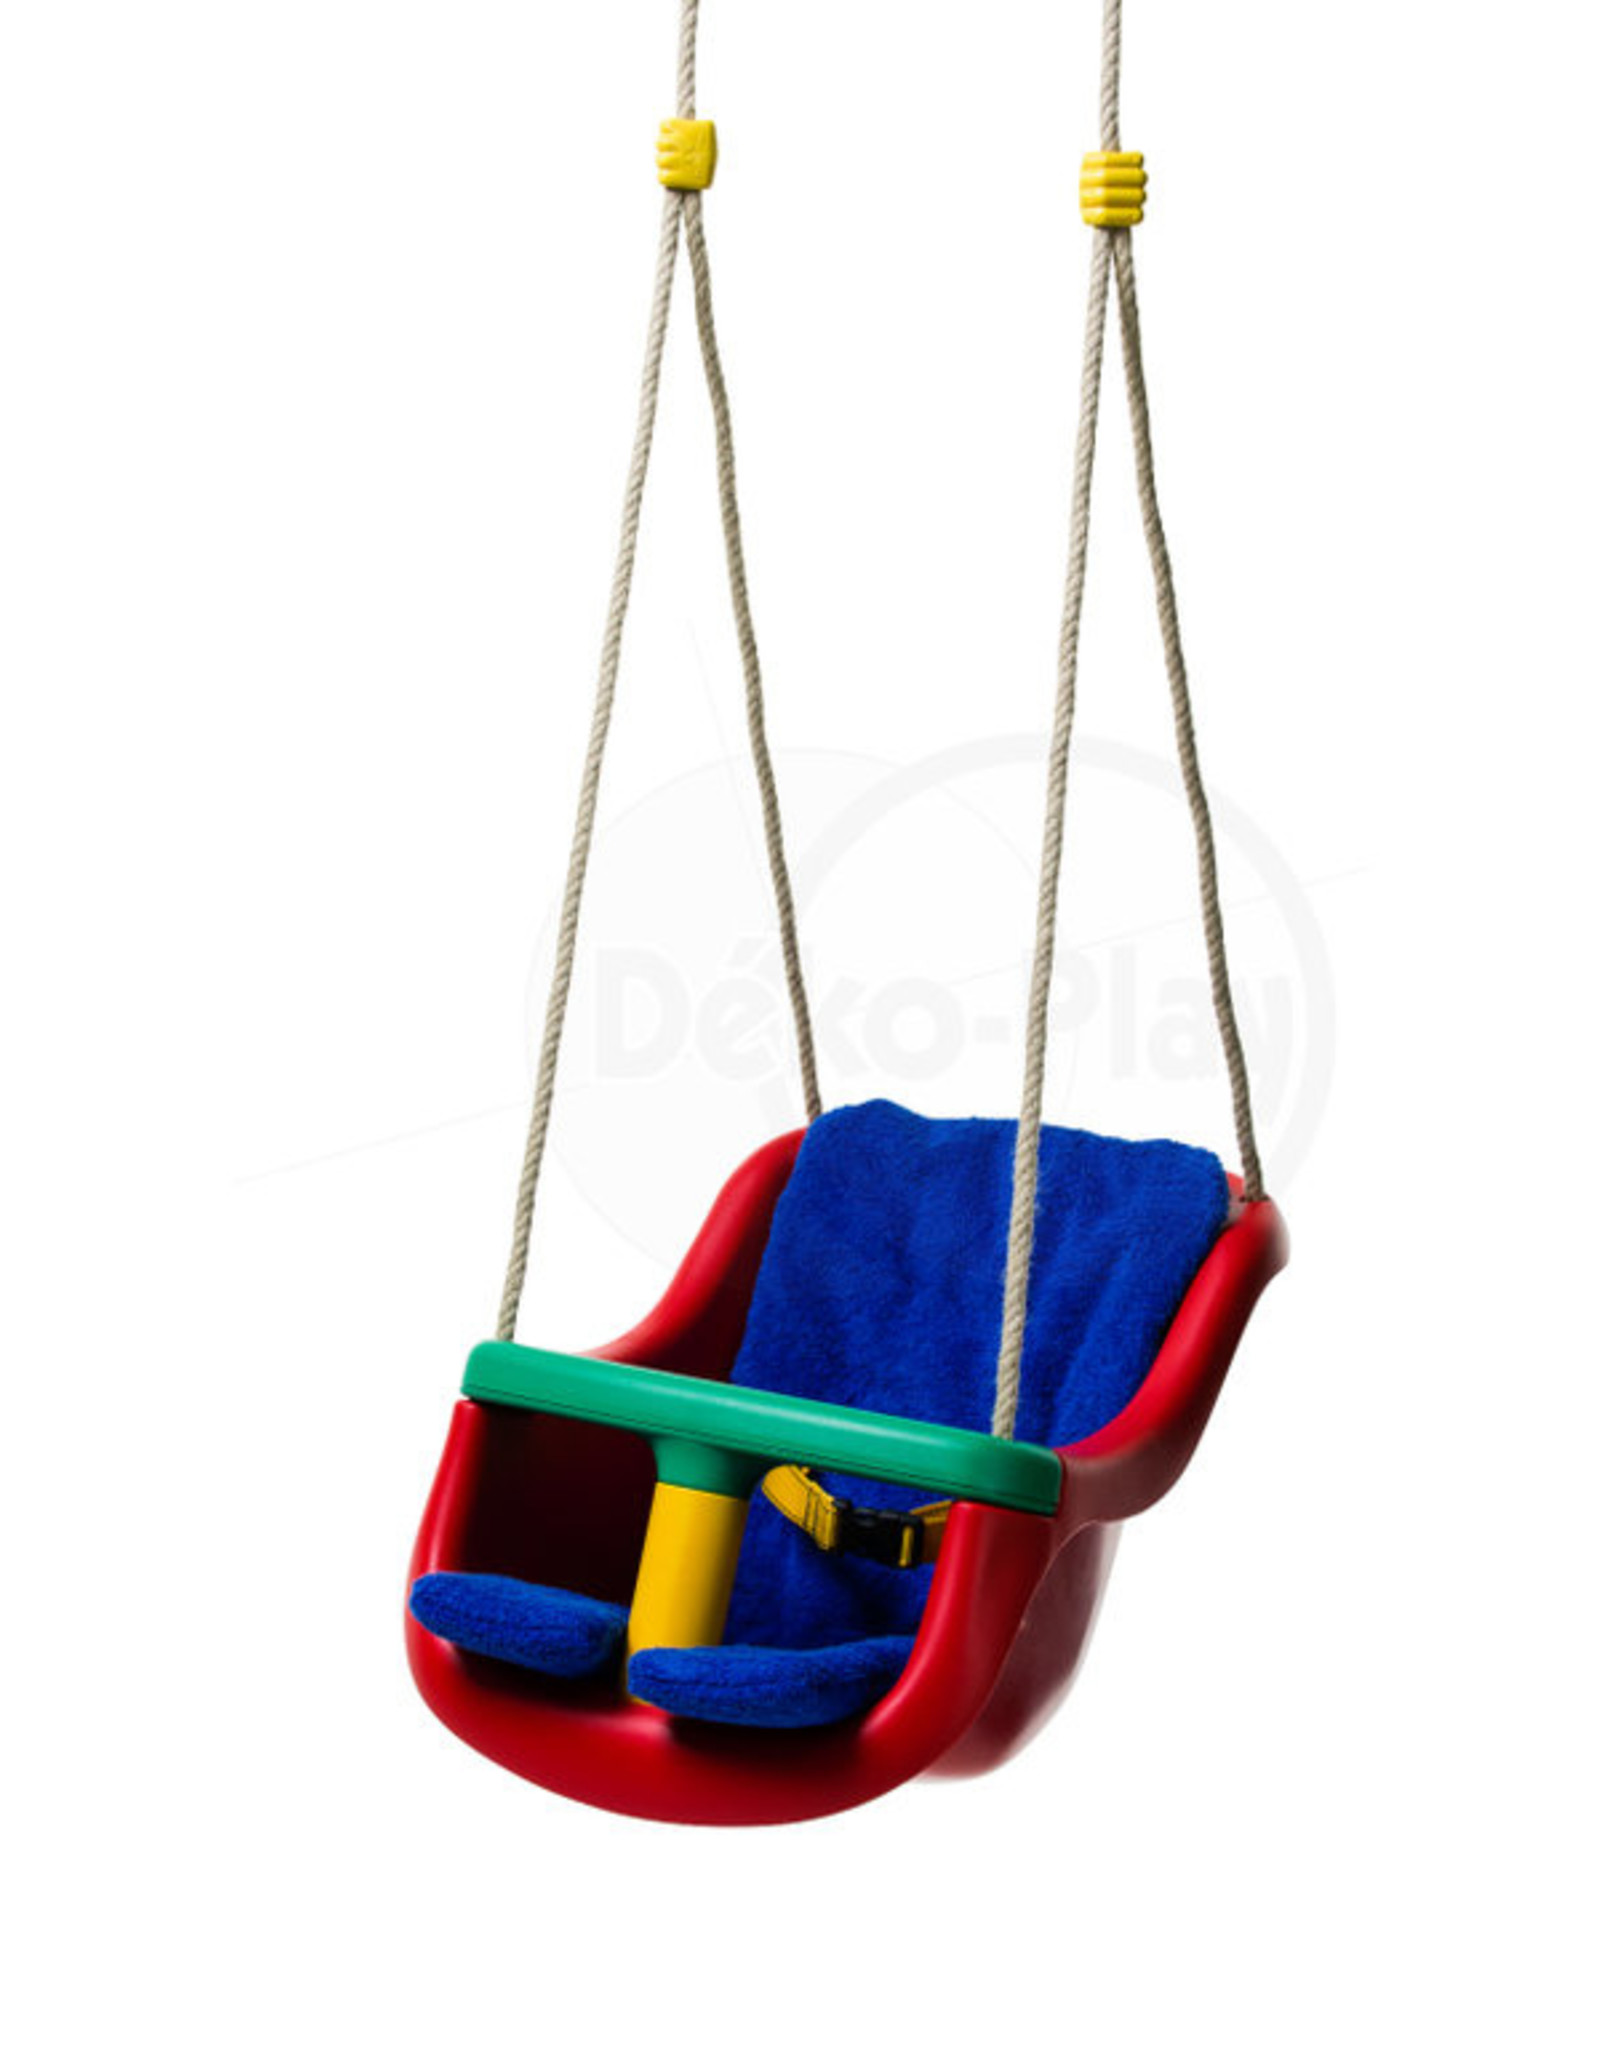 Déko-Play Déko-Play inlay cushion for toddler swingseat